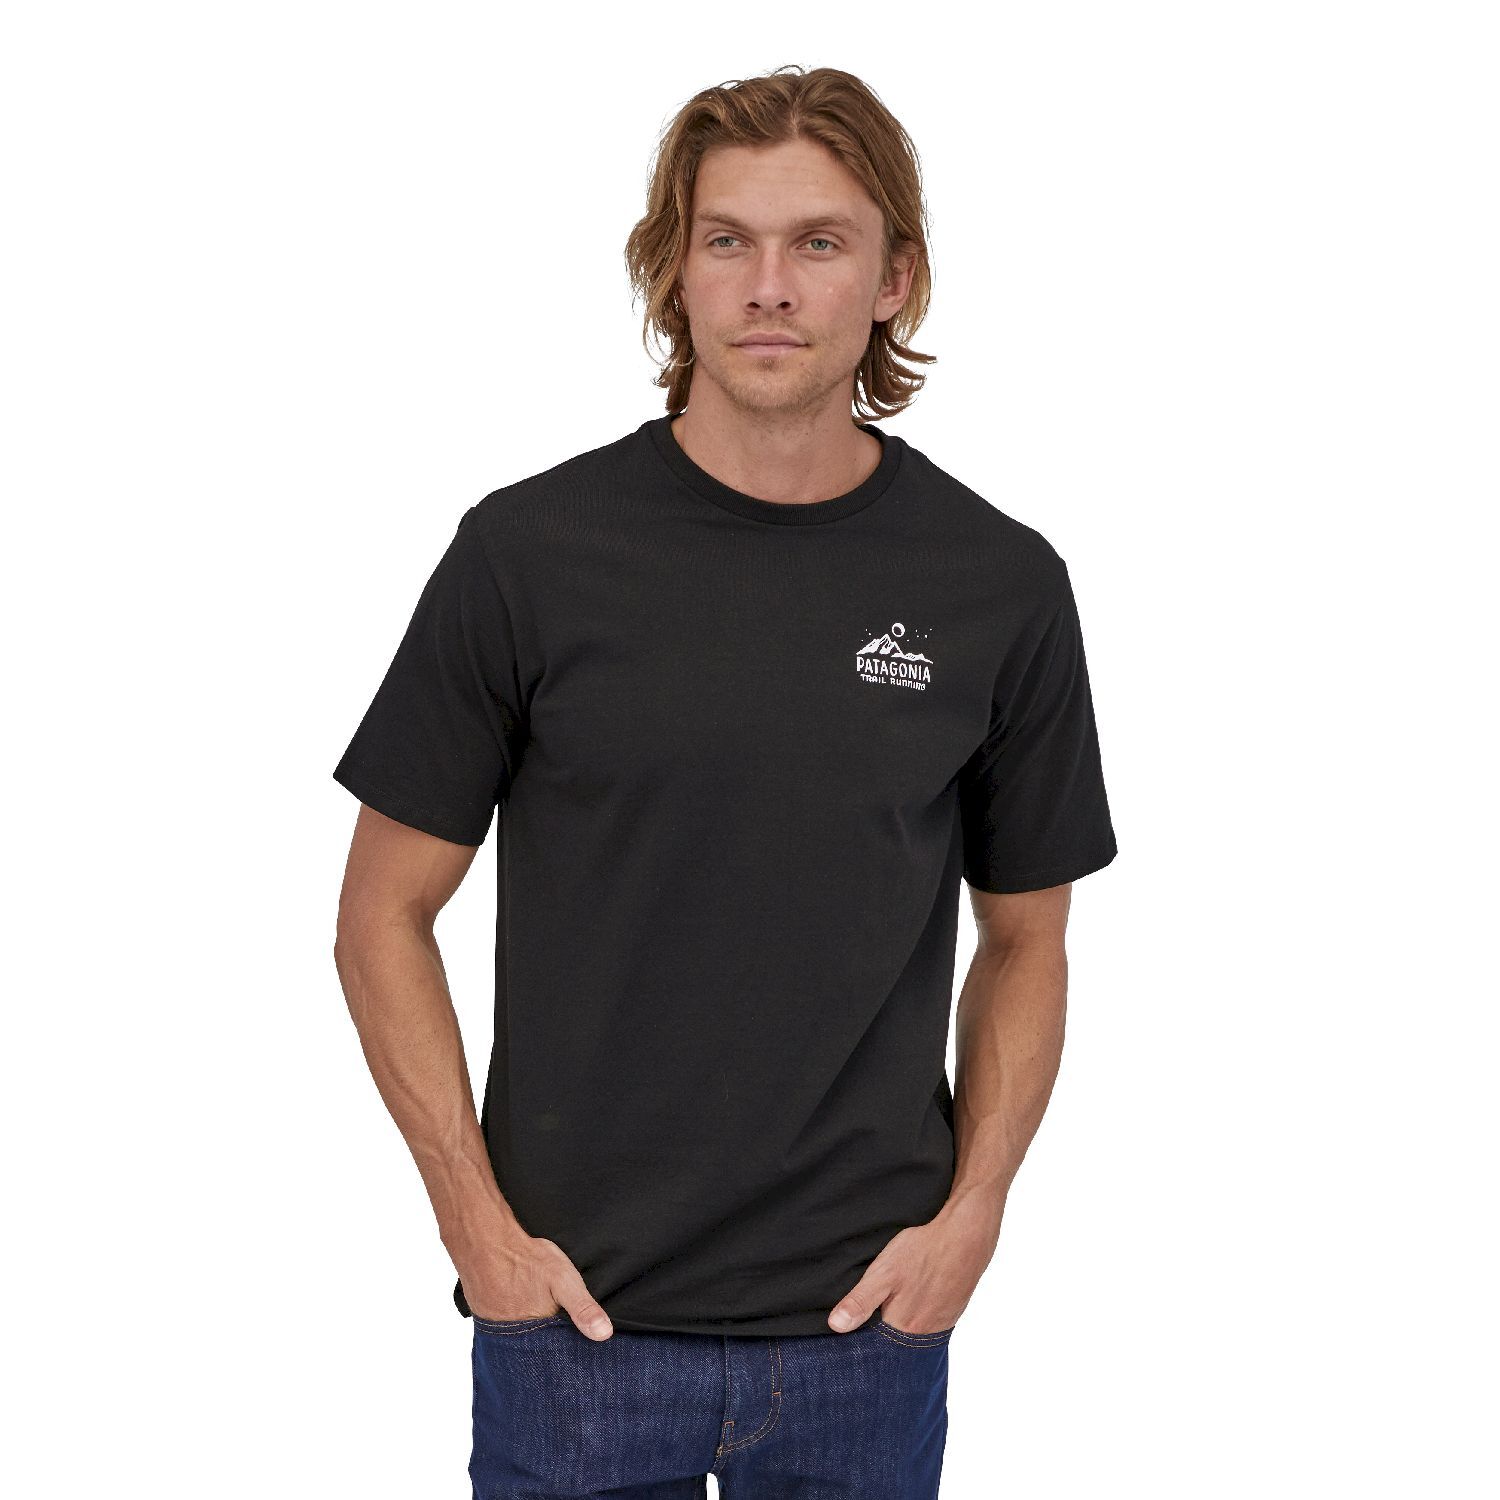 Patagonia Ridgeline Runner Responsibili-Tee - Camiseta - Hombre